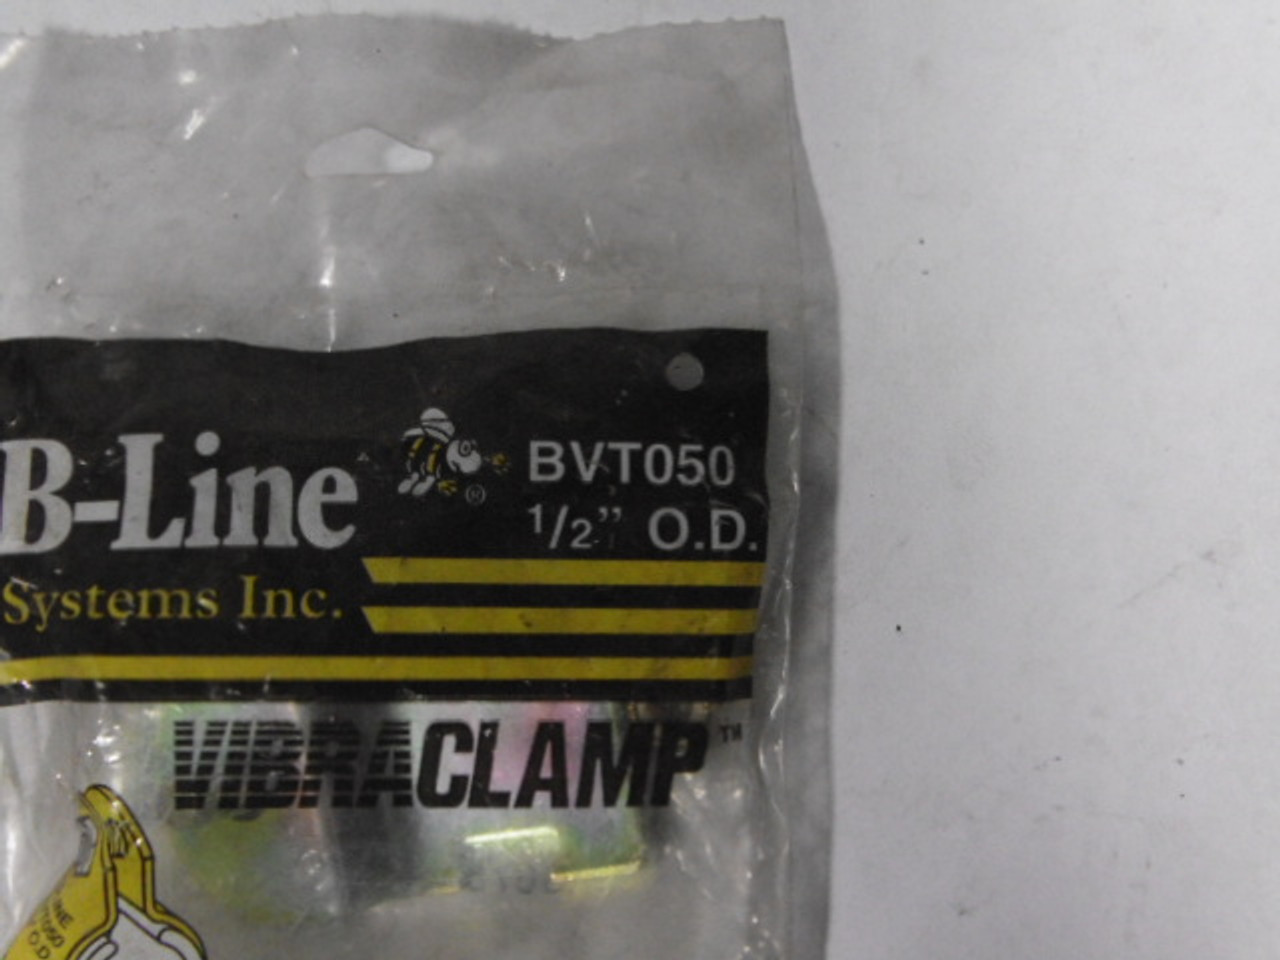 B-Line BVT050 Vibra Clamp 1/2" OD NWB